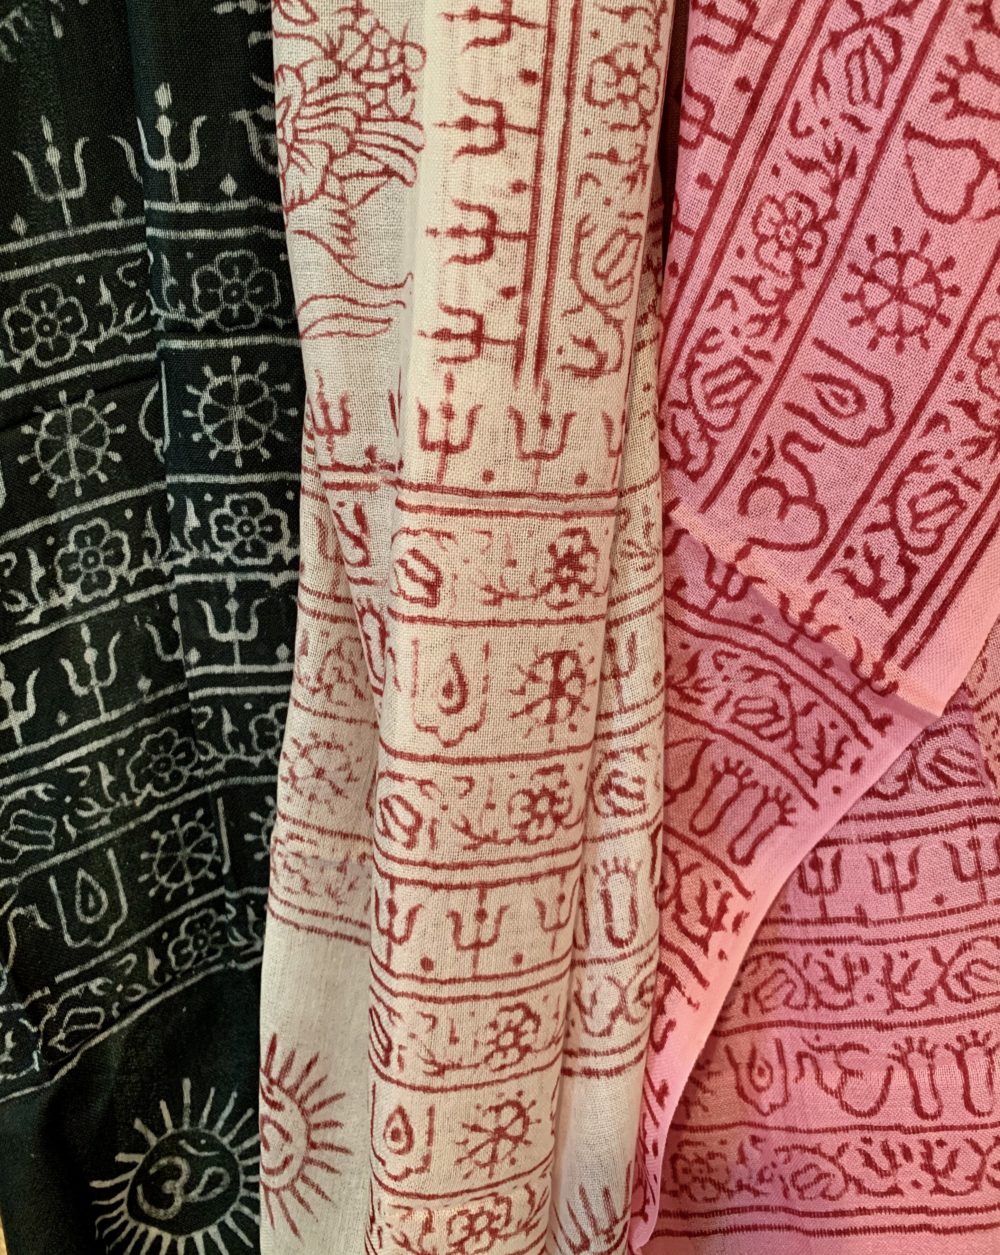 detail of prayer scarves